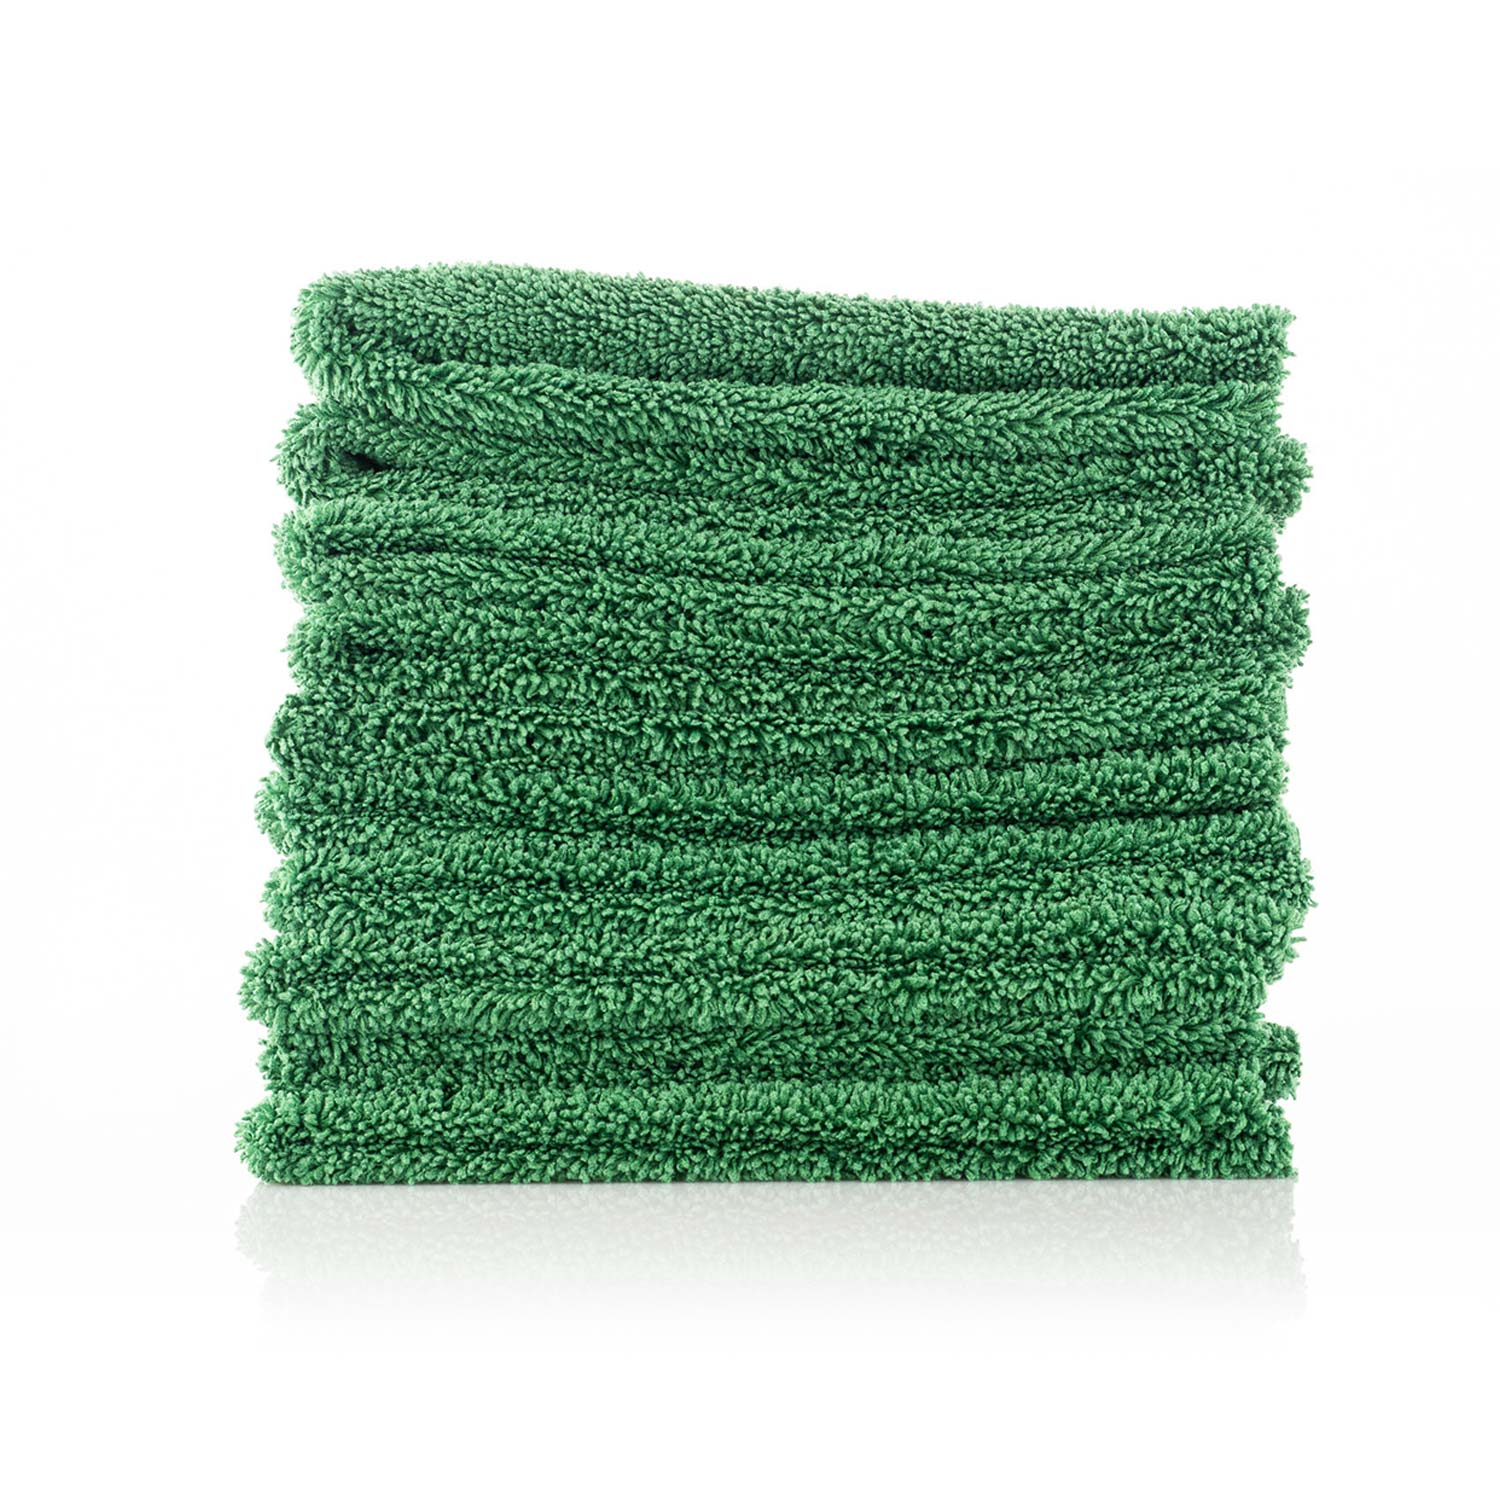 16-x-24-large-edgeless-microfiber-detailing-towel-green-10-pack